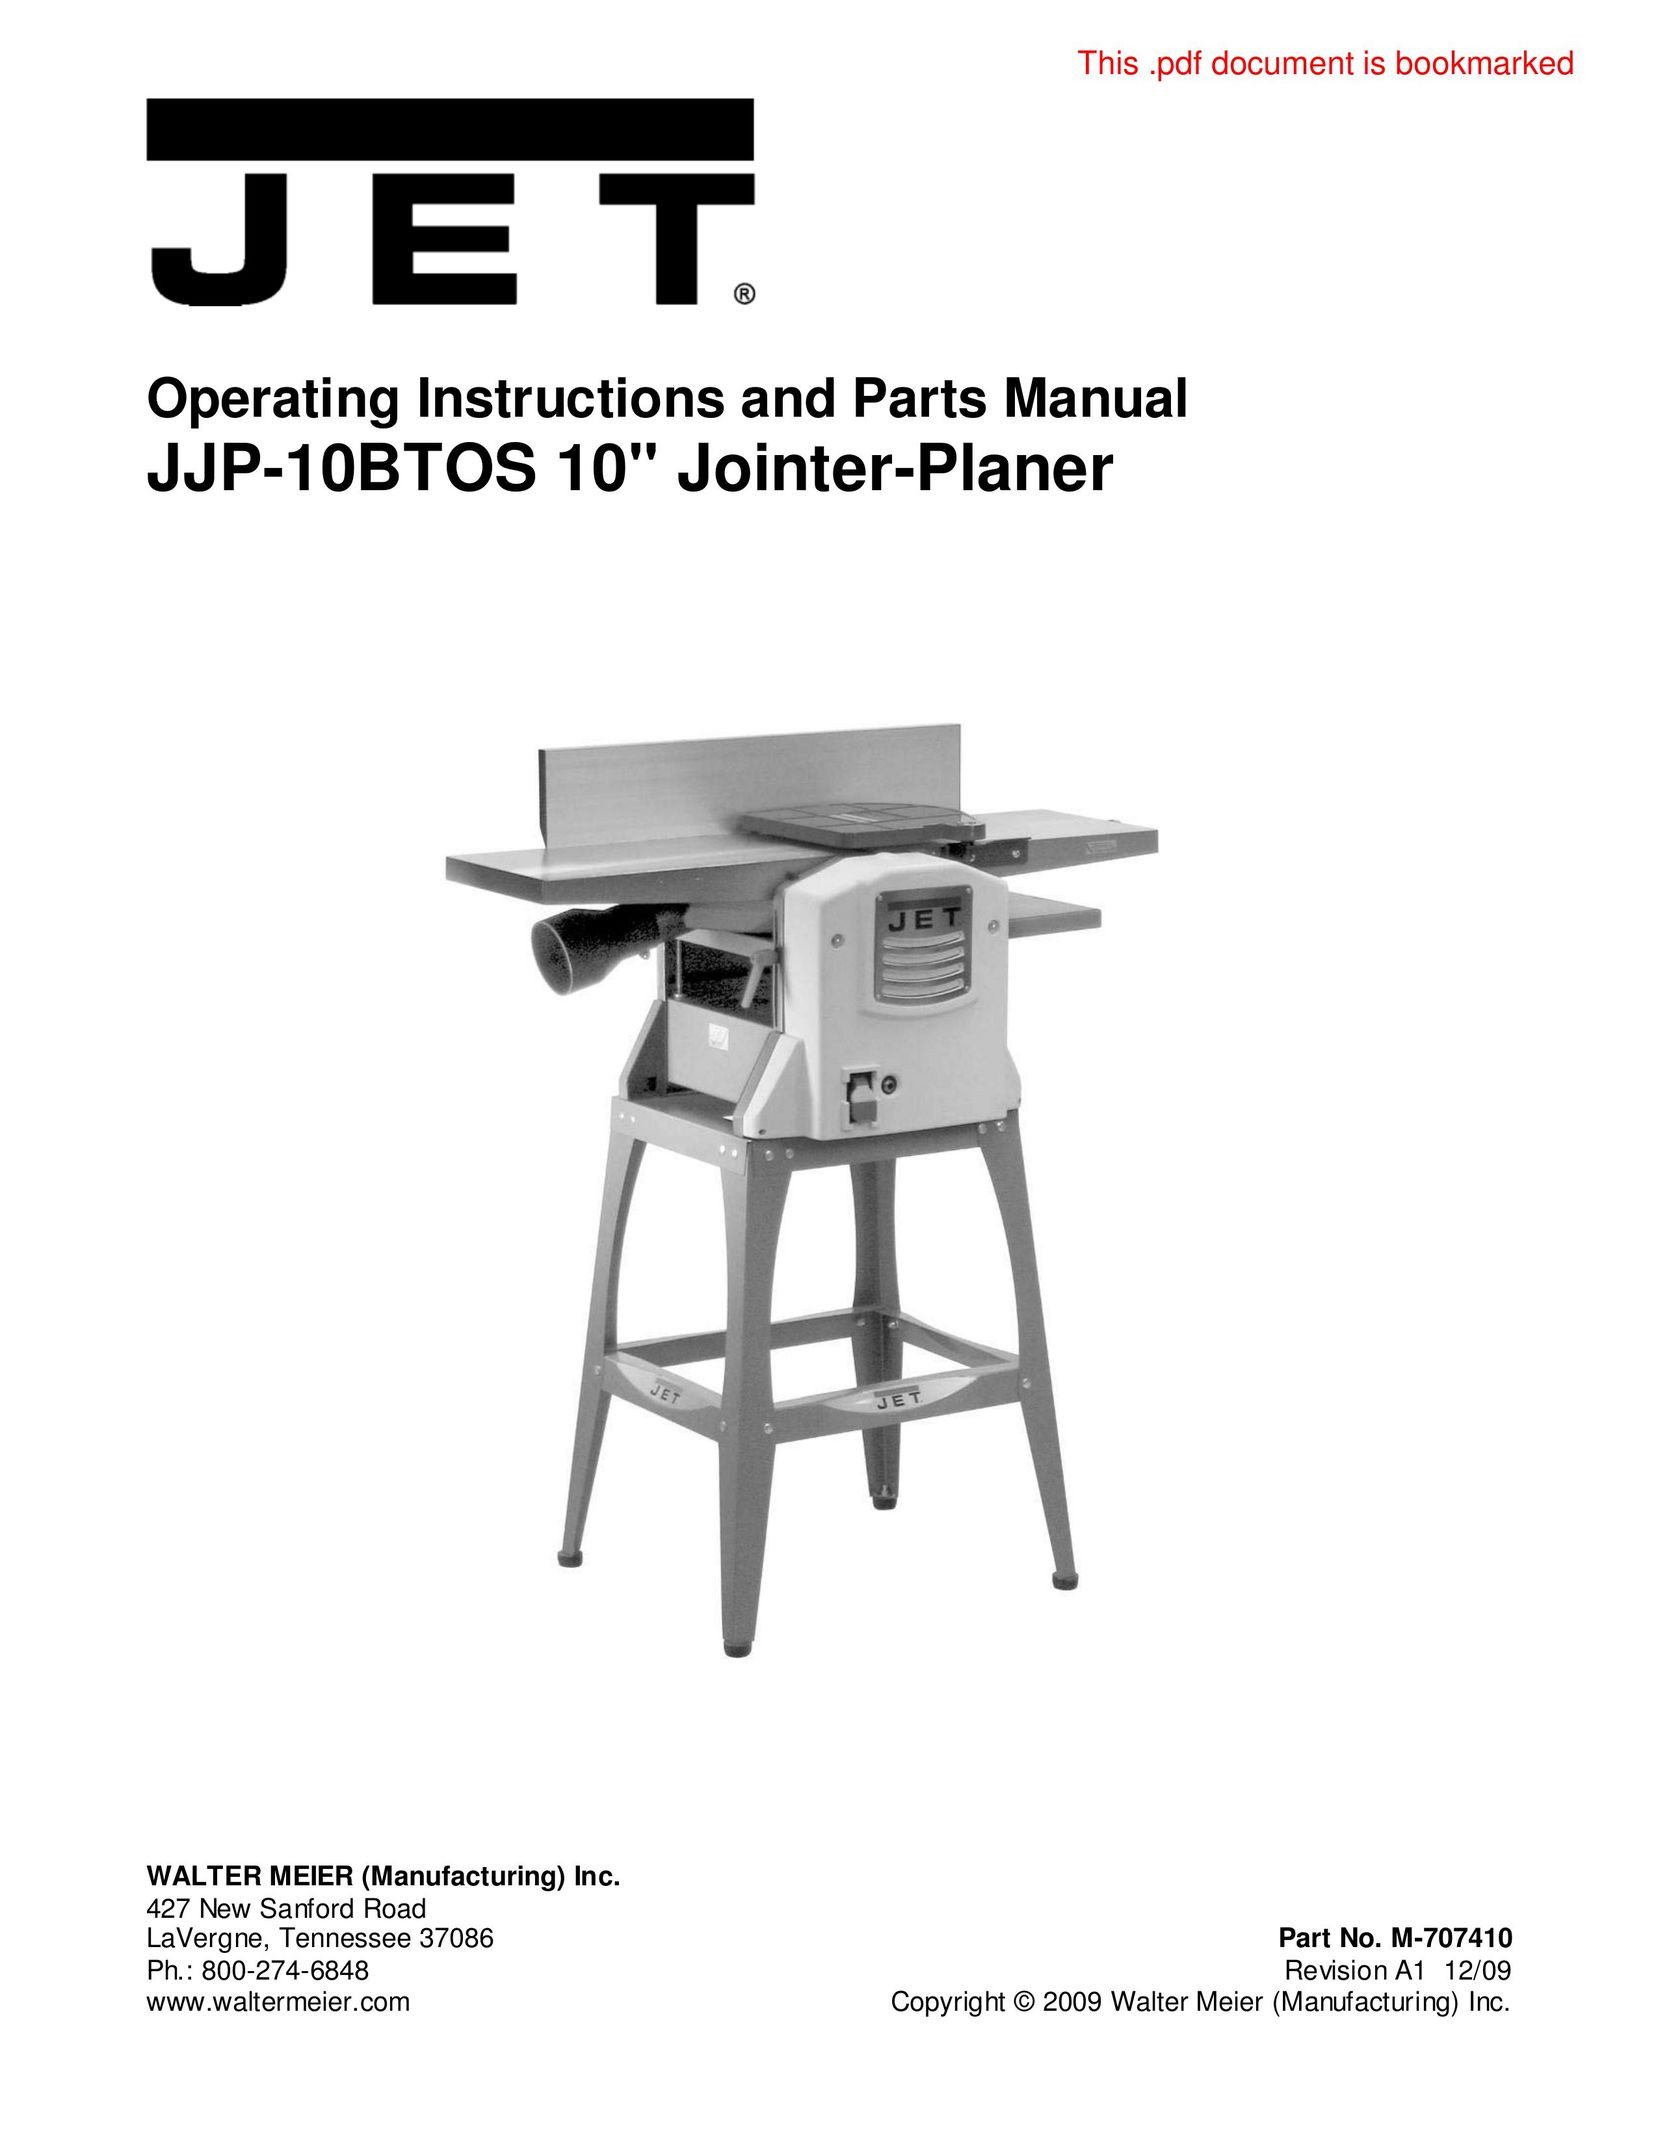 Jet Tools JJP-10BTOS Planer User Manual